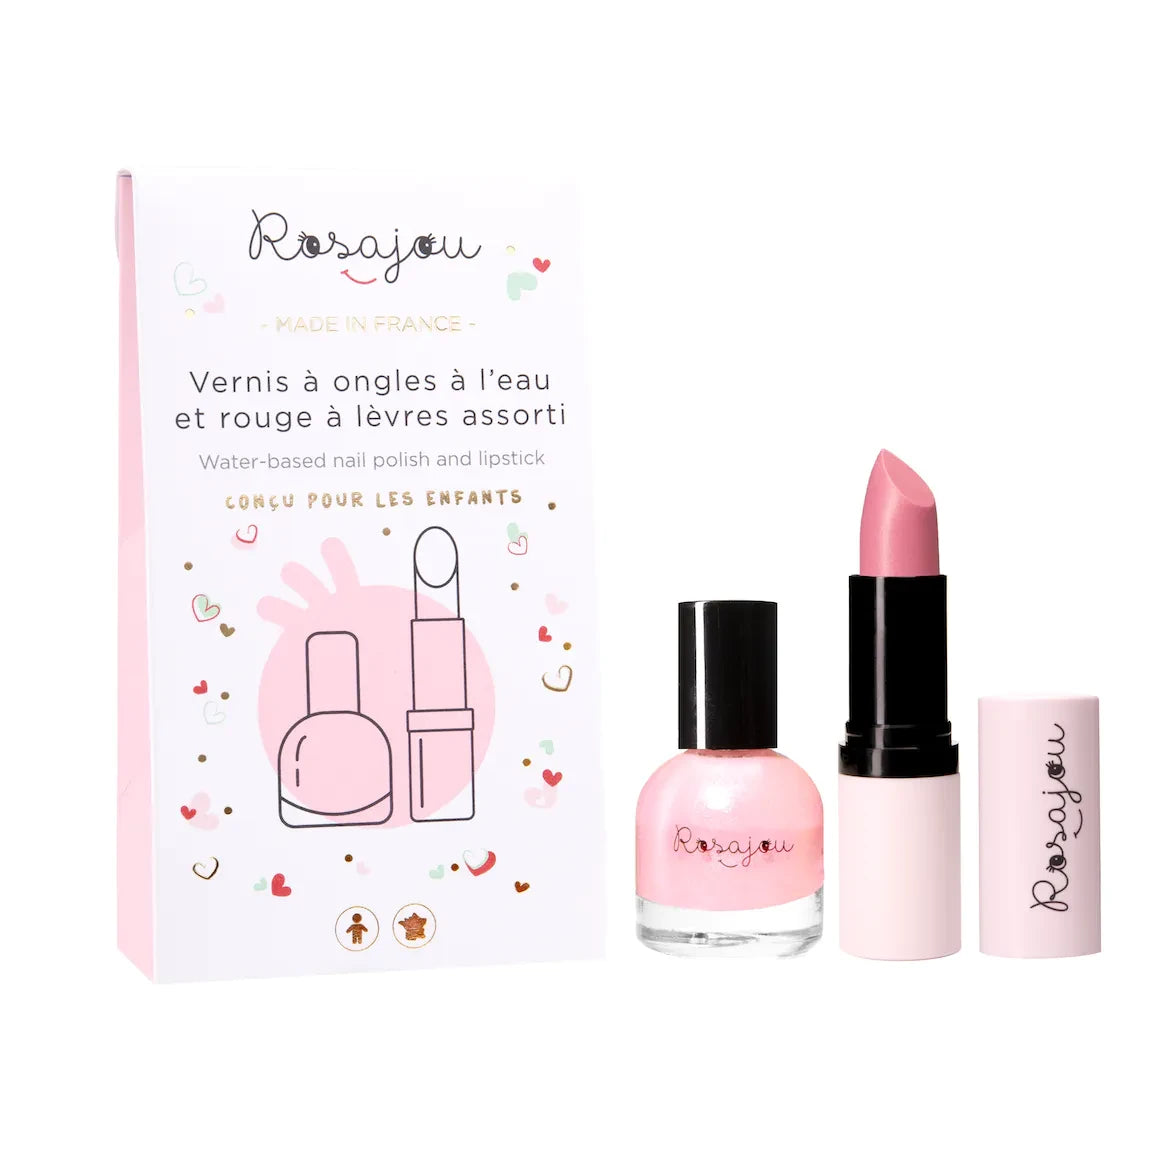 Rosajou lipstick and nail polish duo set